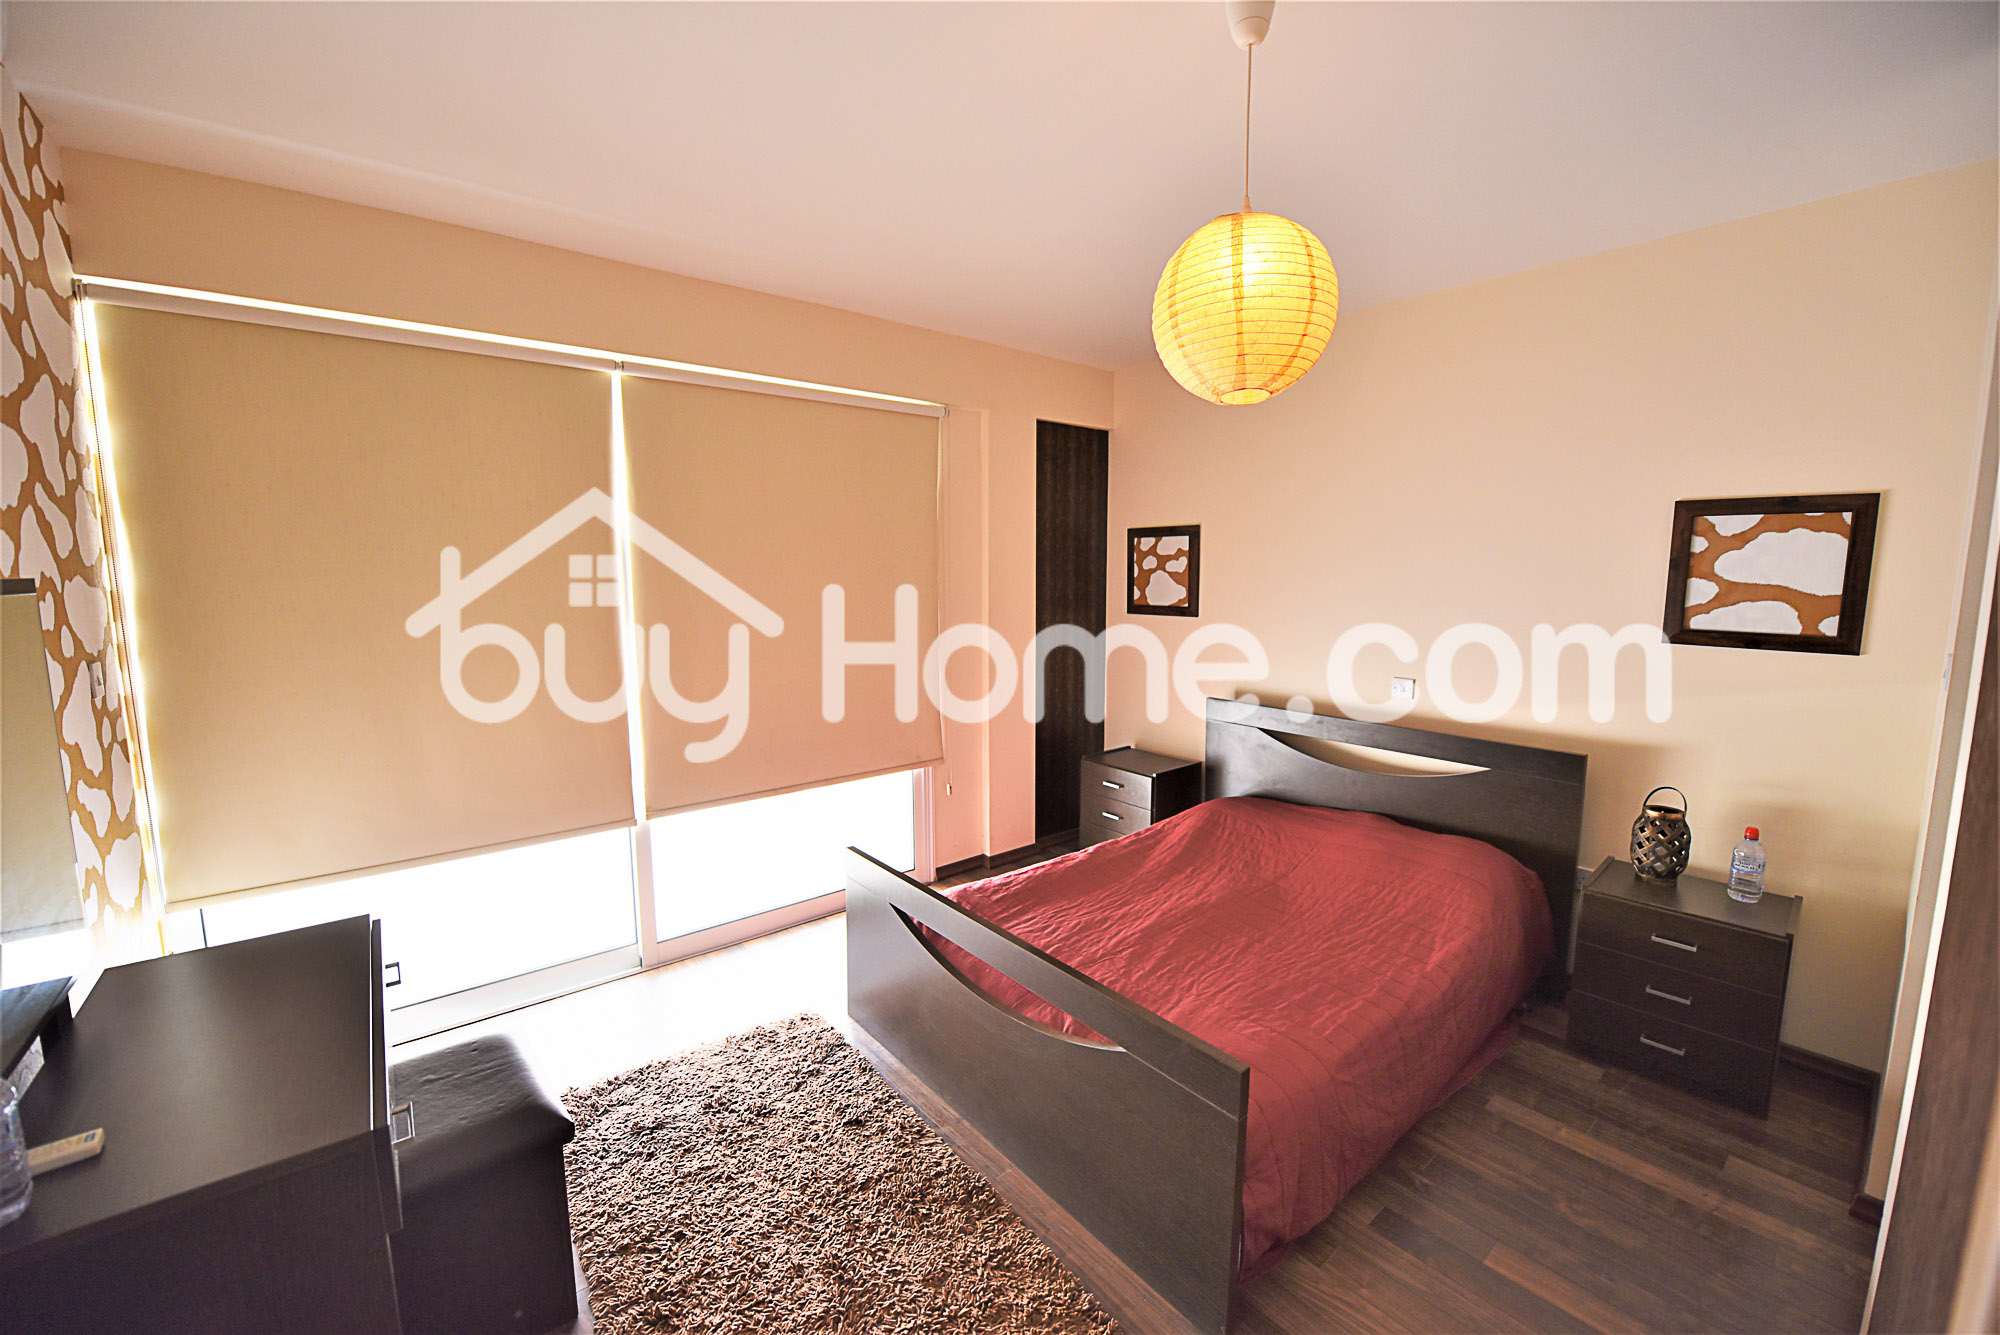 3 Bedroom Duplex Penthouse | BuyHome